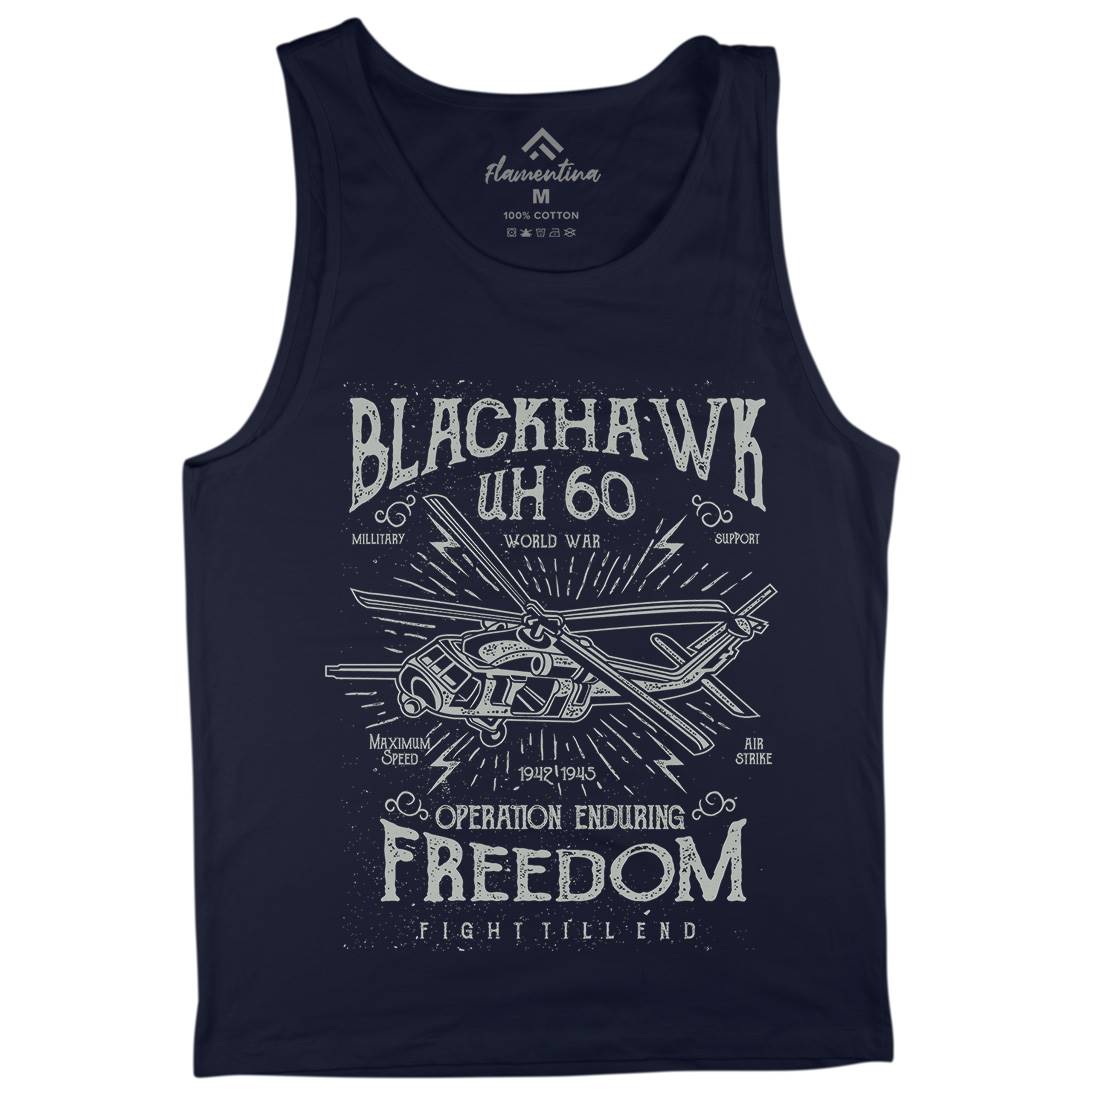 Blackhawk Mens Tank Top Vest Army A016